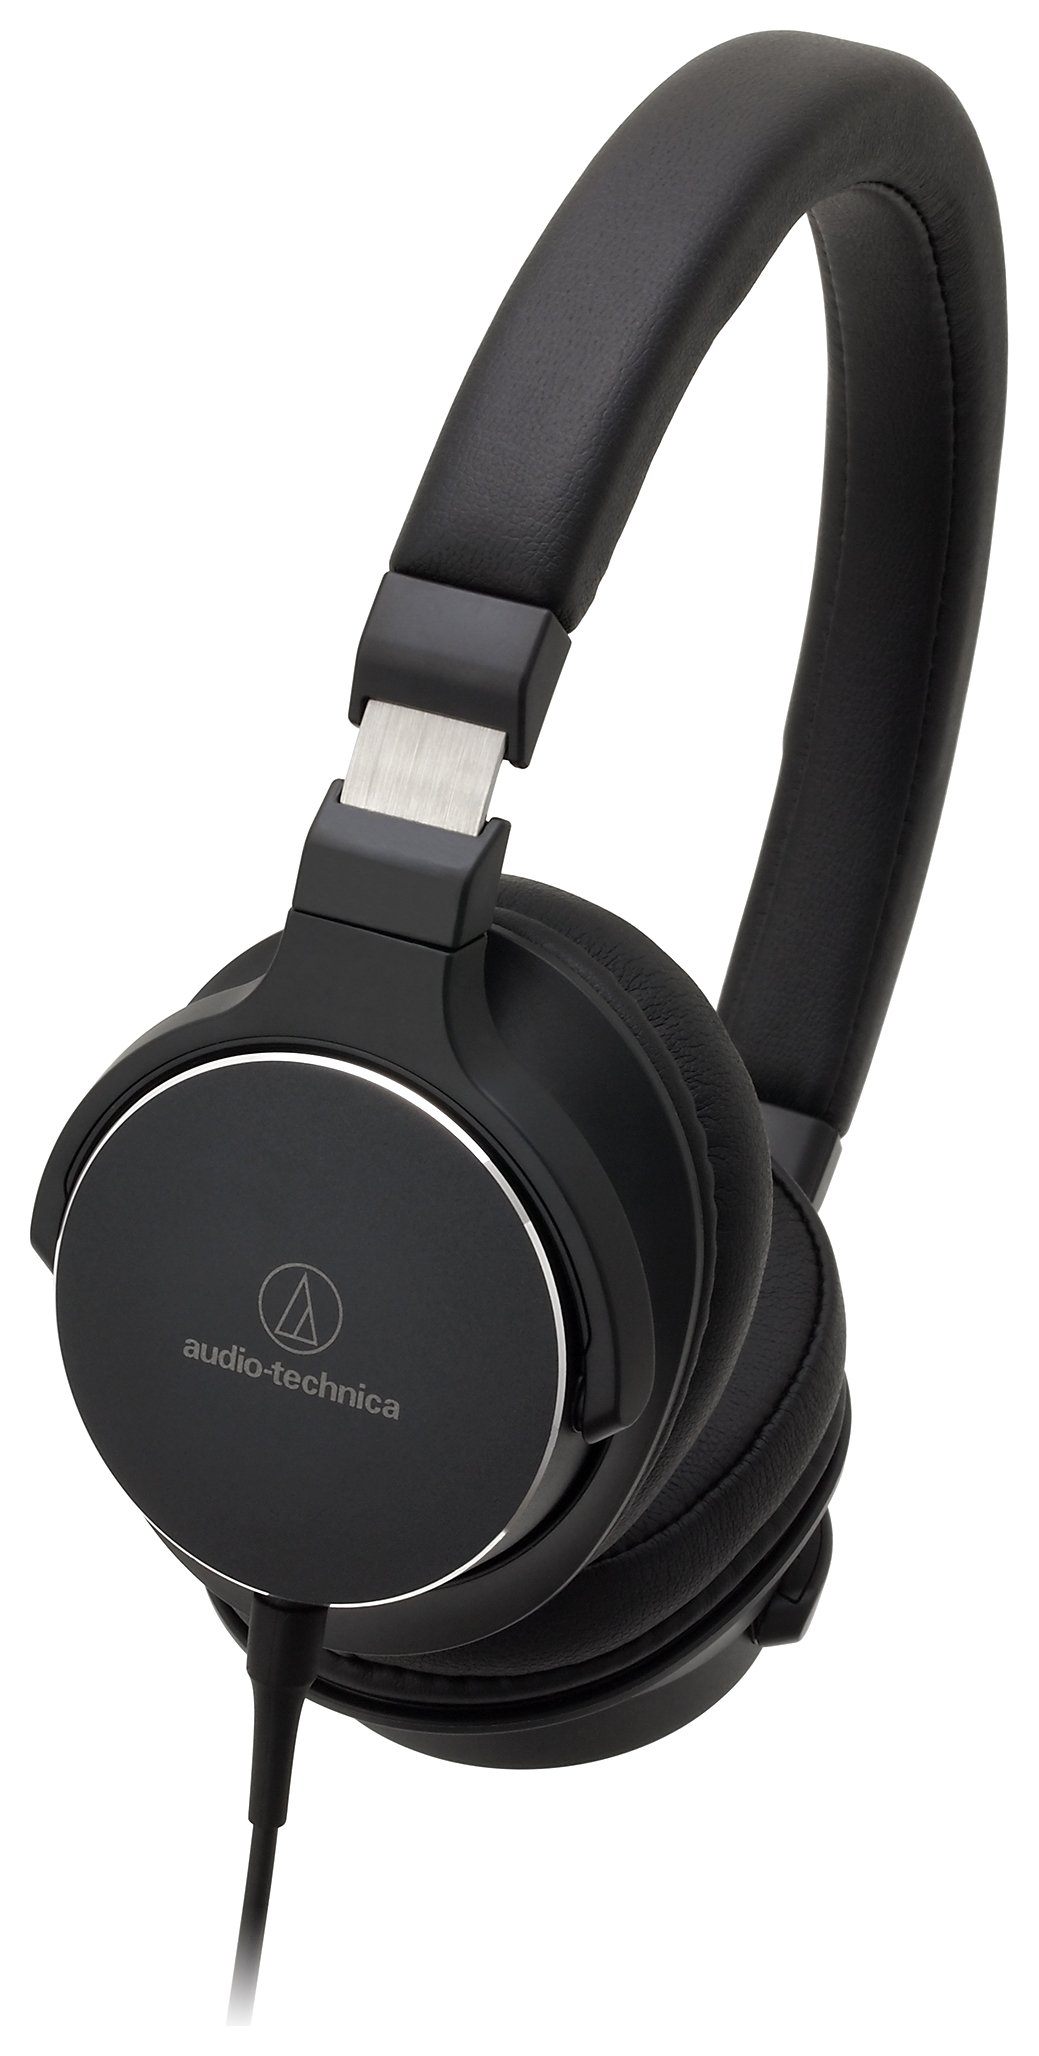 Audio Technica ATH-SR5 On-Ear Headphones - Black